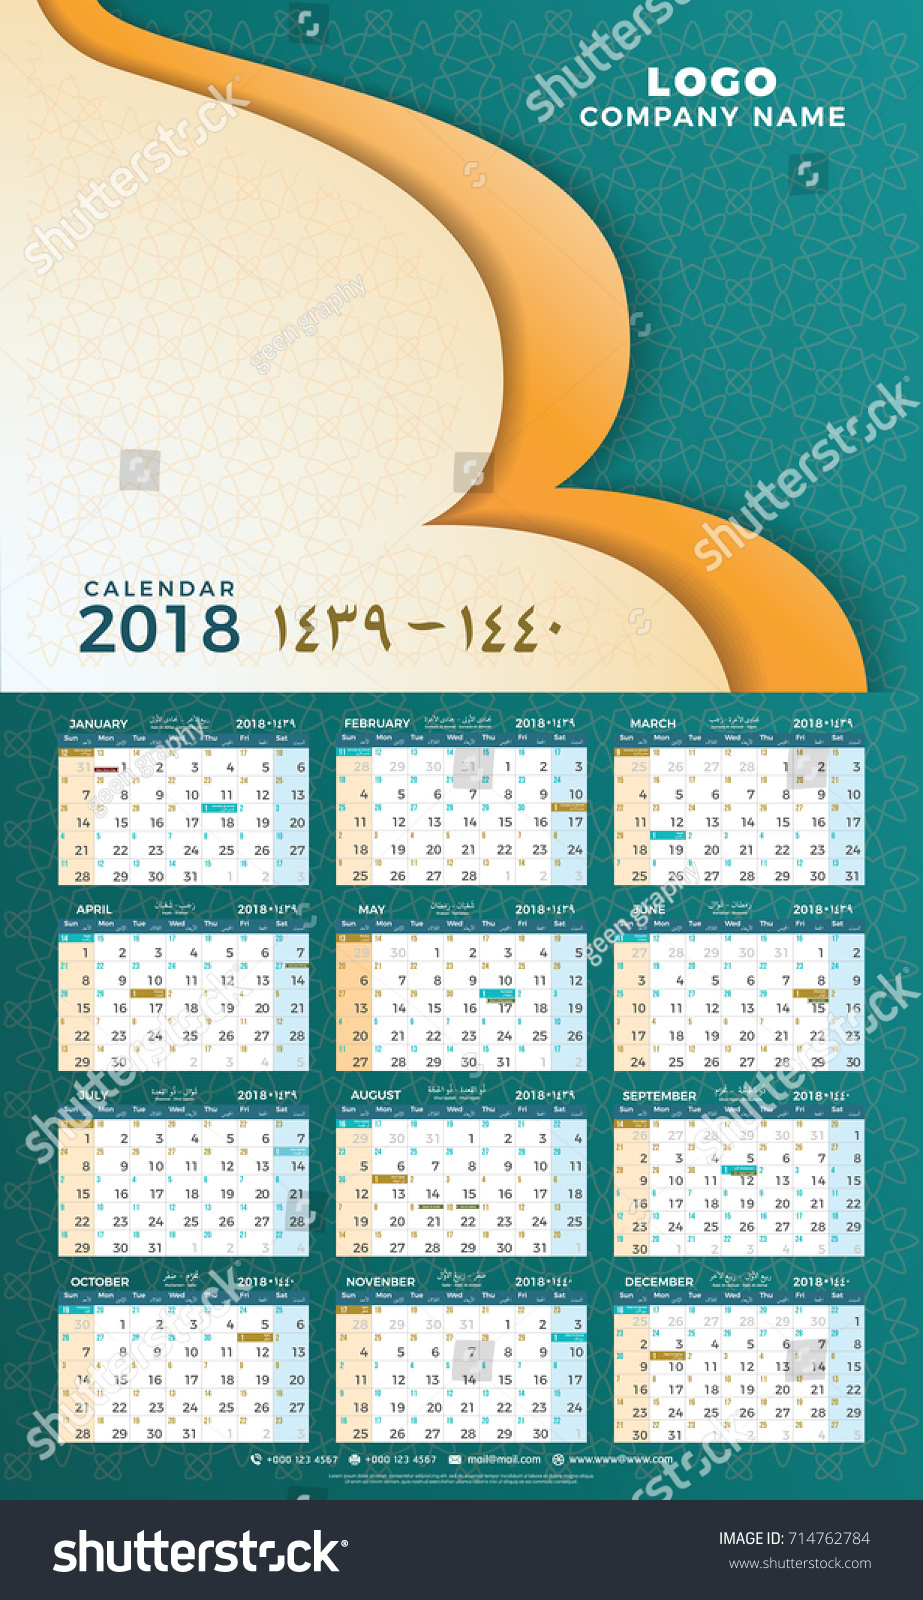 hijri-1439-1440-islamic-calendar-2018-stock-vector-714762784-shutterstock